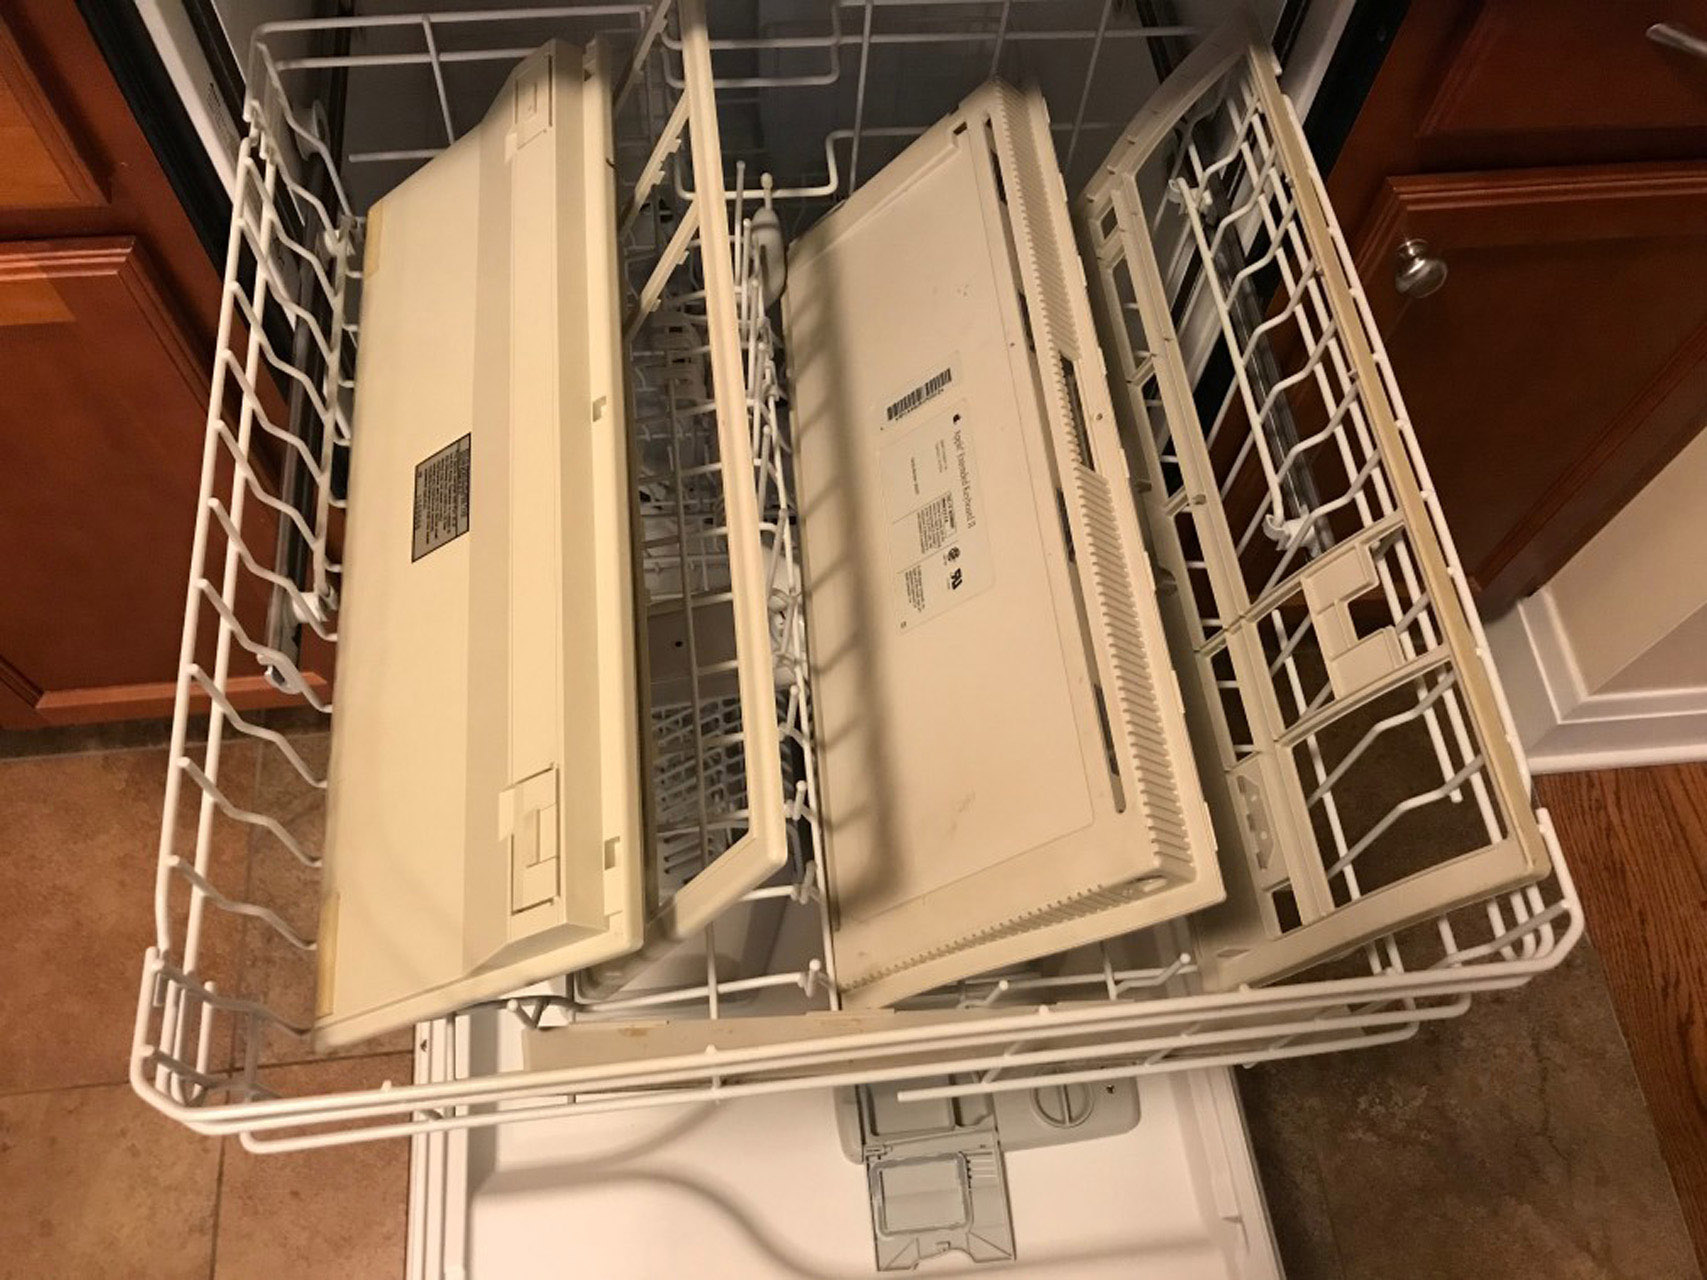 Keyboard Case in Dishwasher